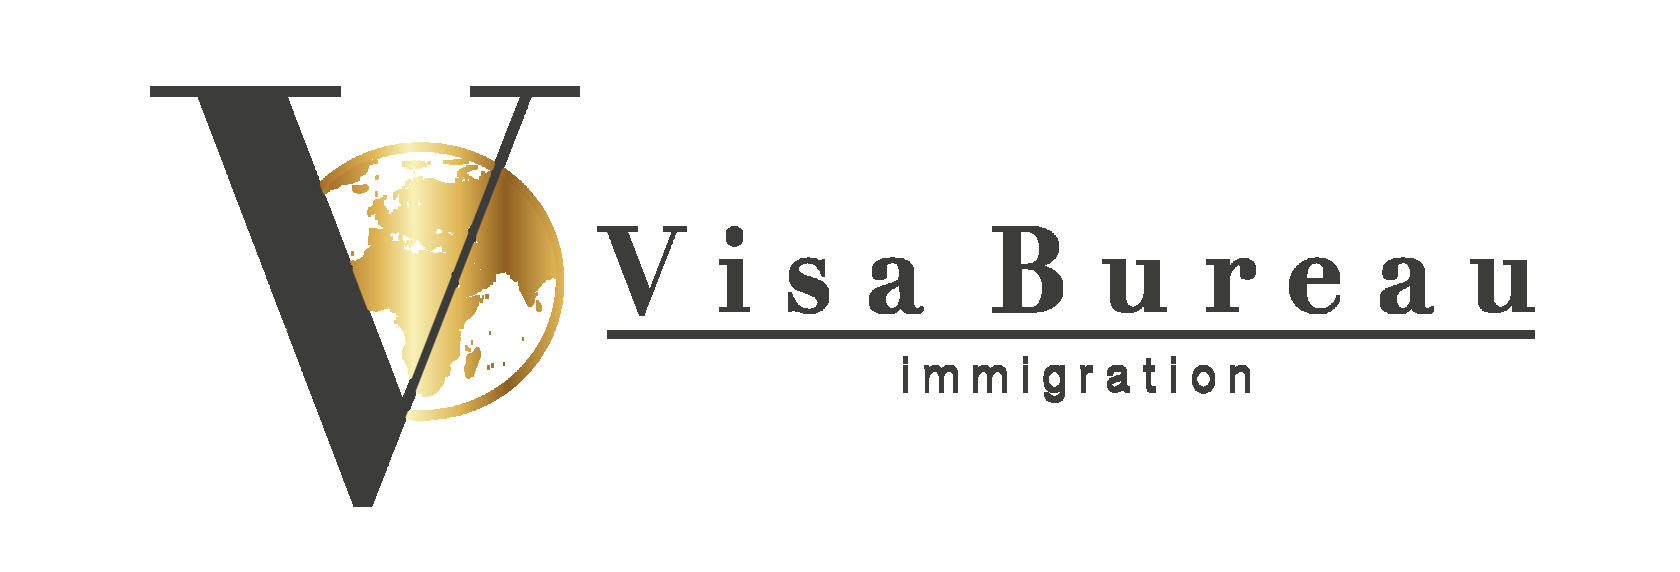 Visa Bureau